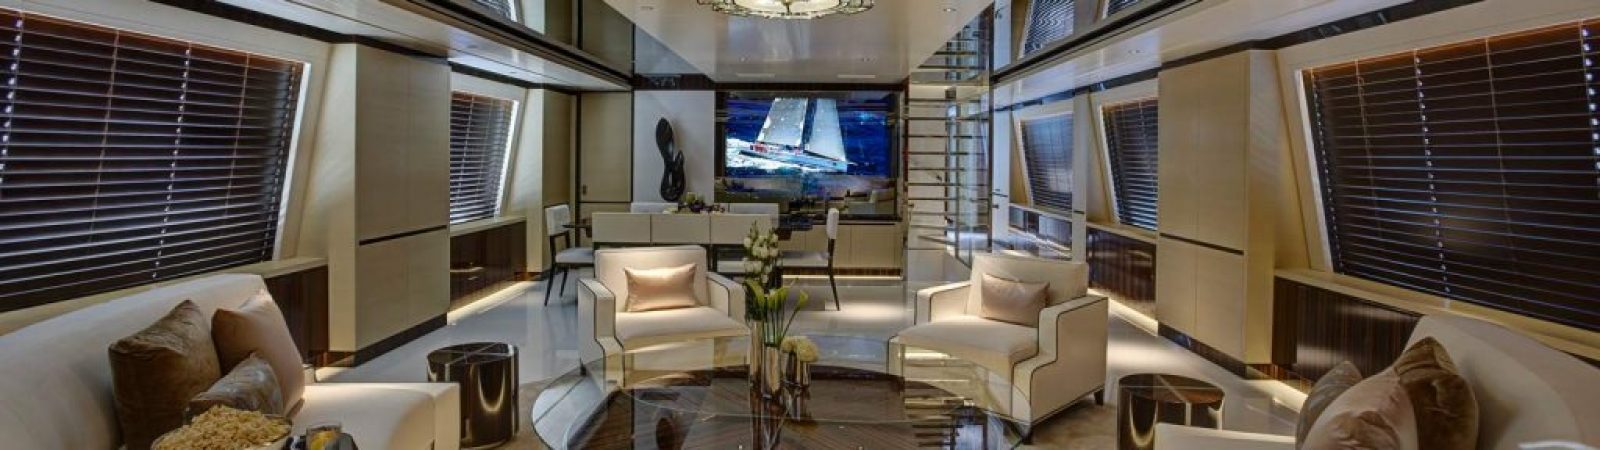 Award winning yacht interiors